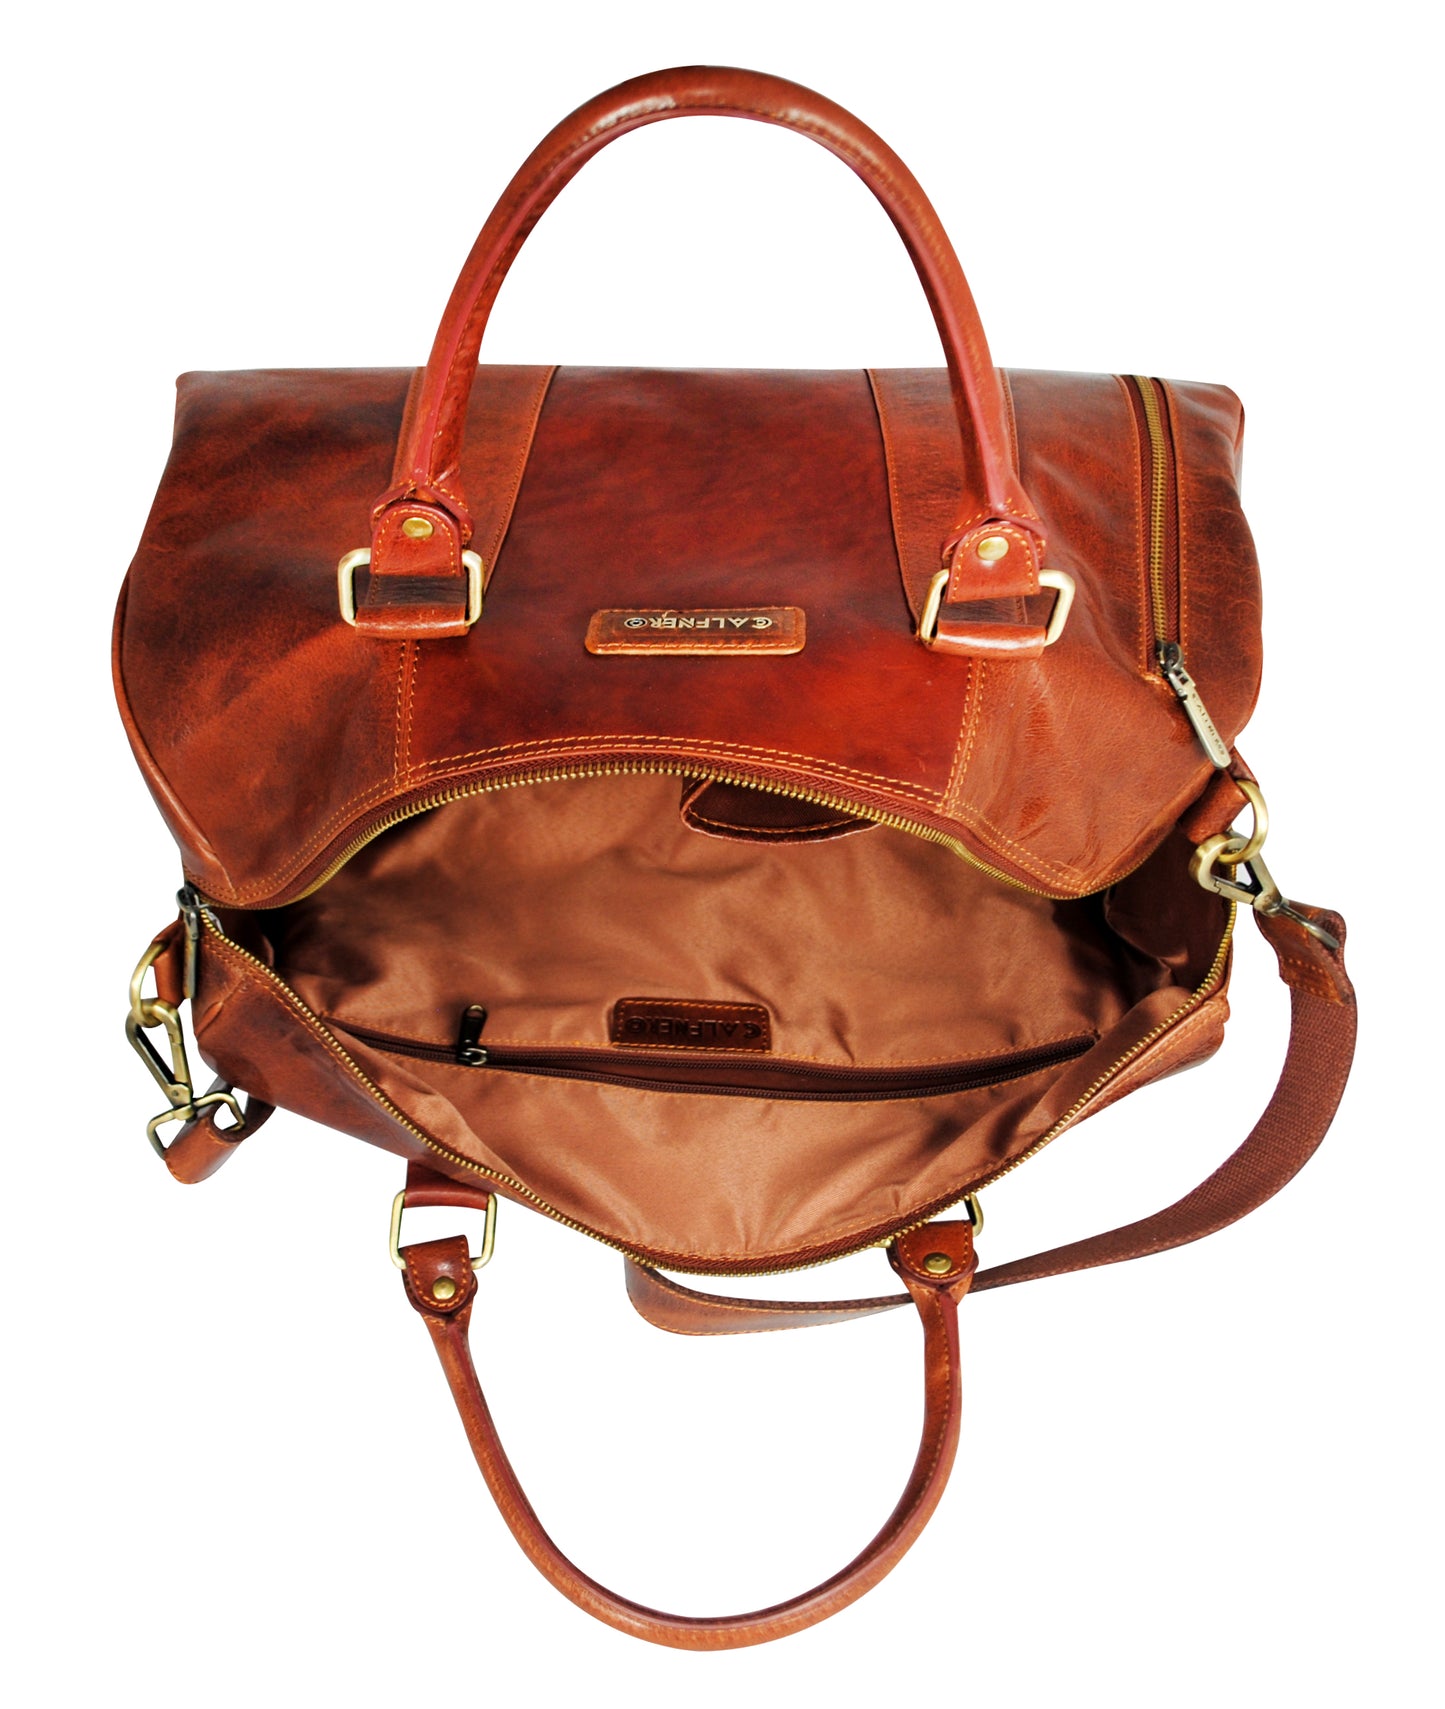 Calfnero Genuine Leather Travel Duffel Bag (LB-04-Cognac)